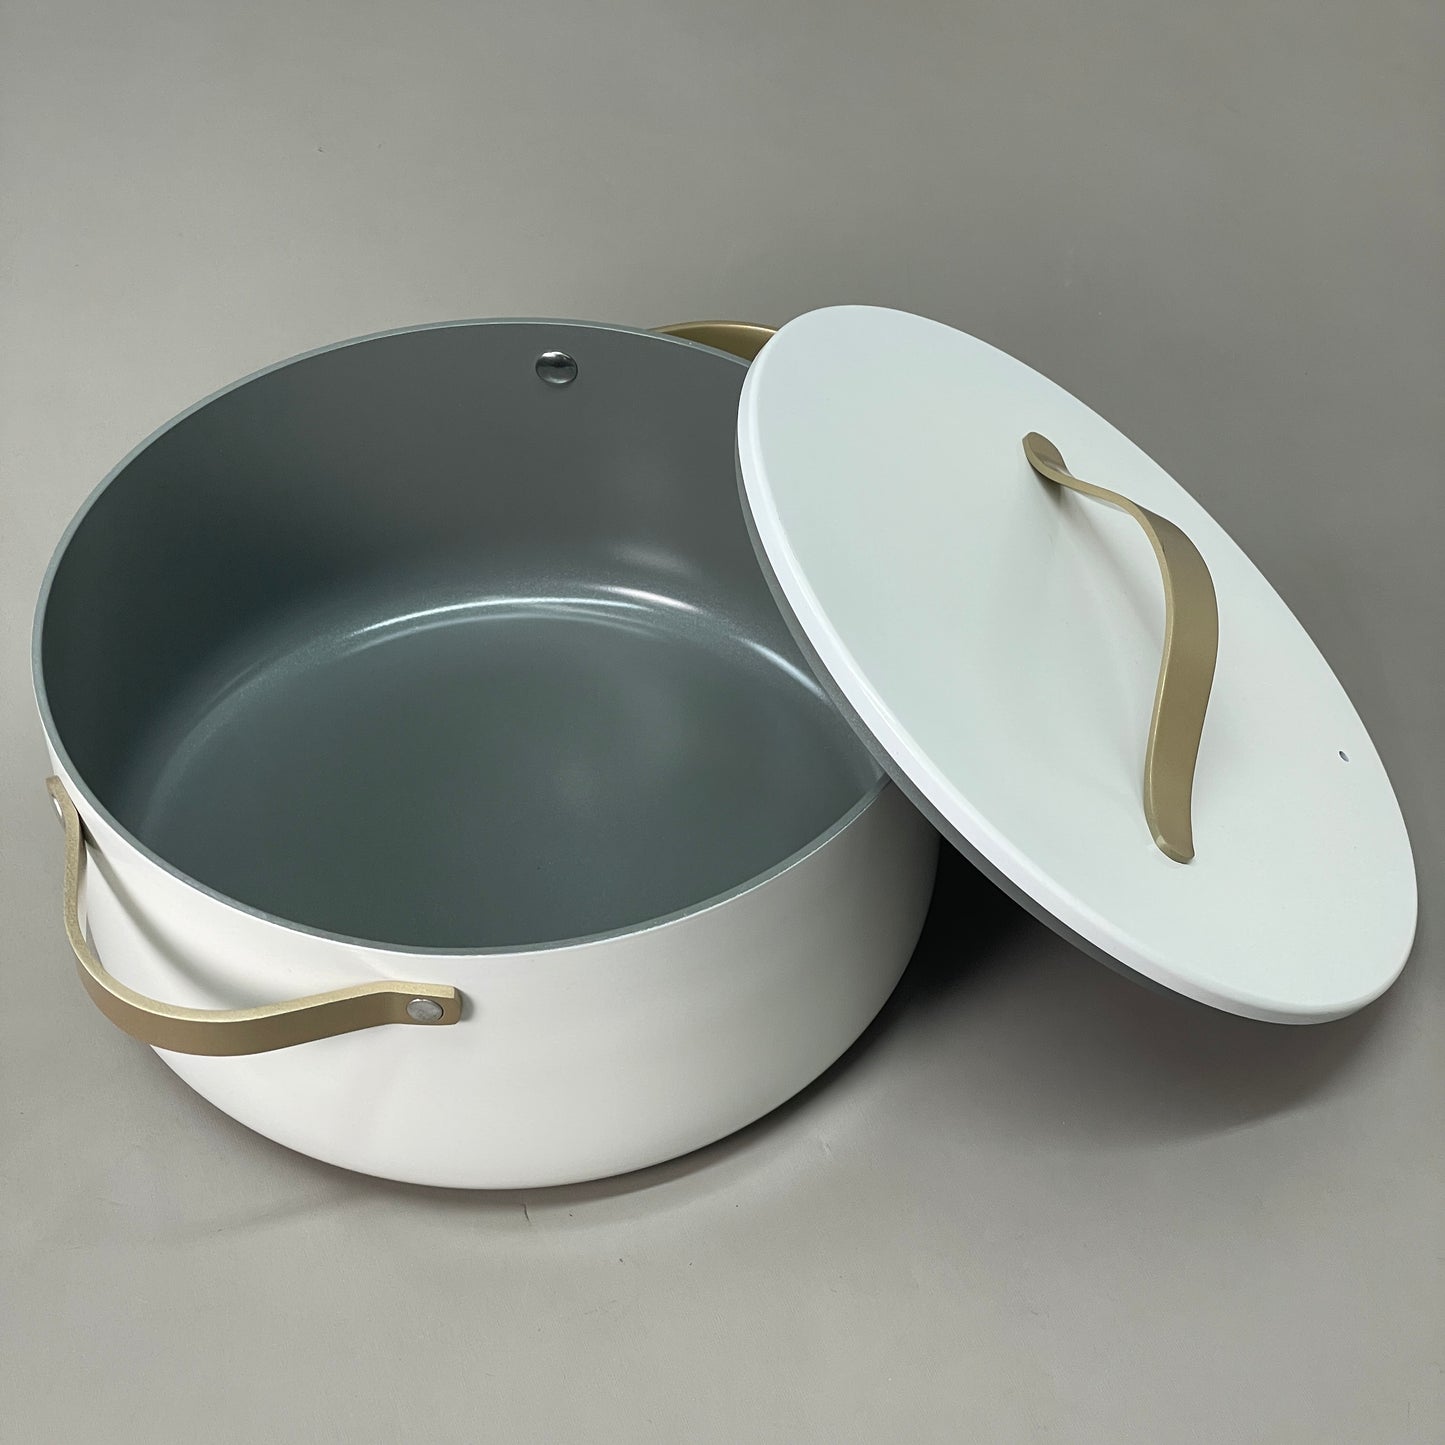 BEAUTIFUL (12-PIECE) Ceramic Non-Stick Cookware Set White Icing Drew Barrymore